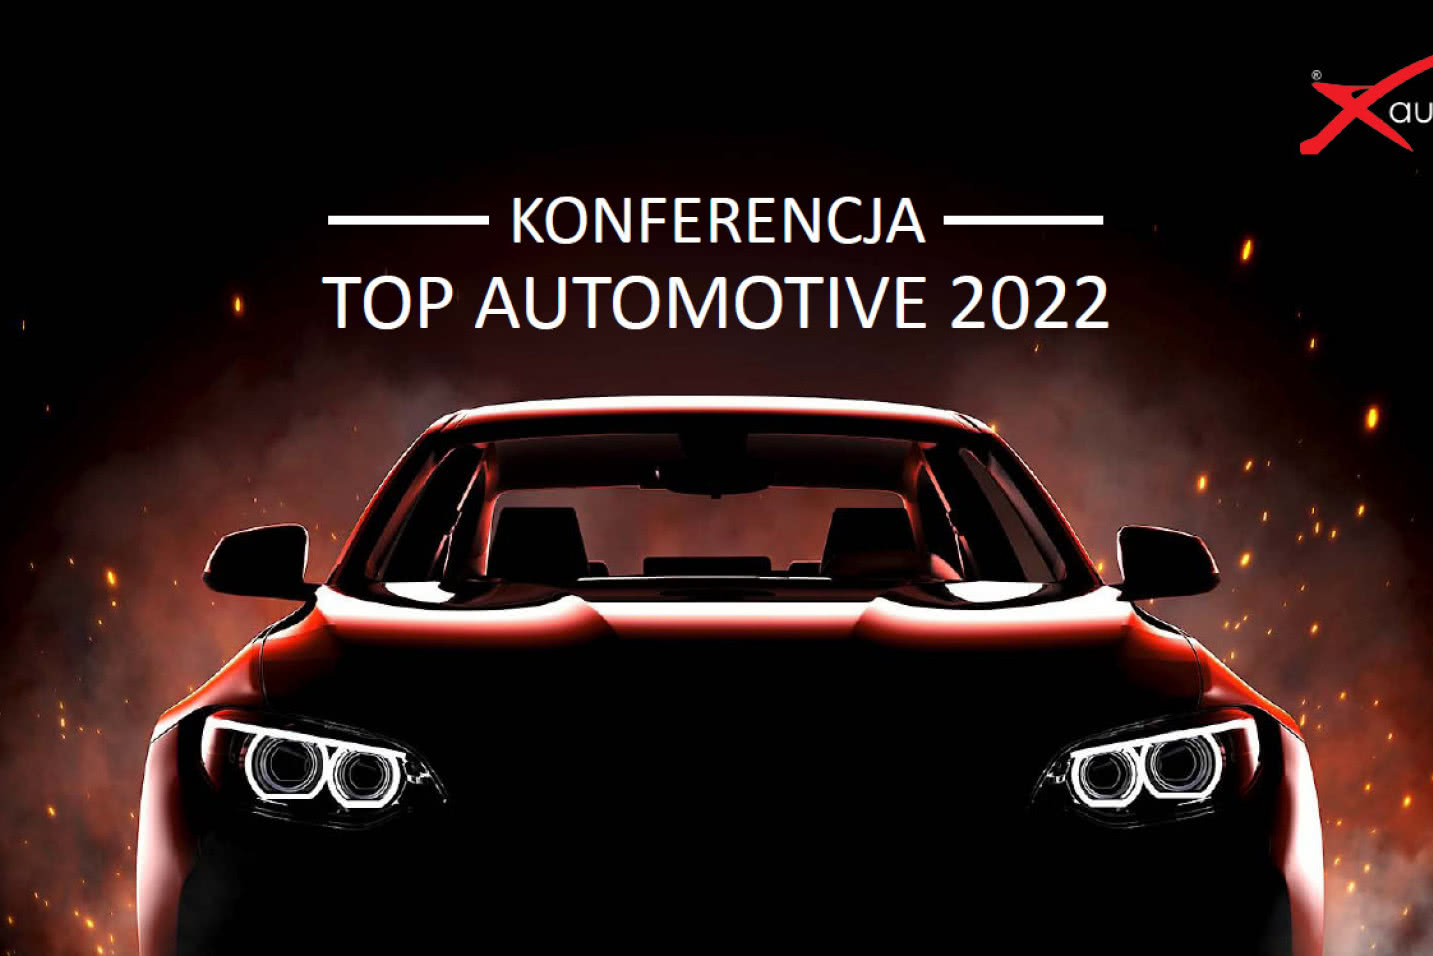 TOP automotive 2022 